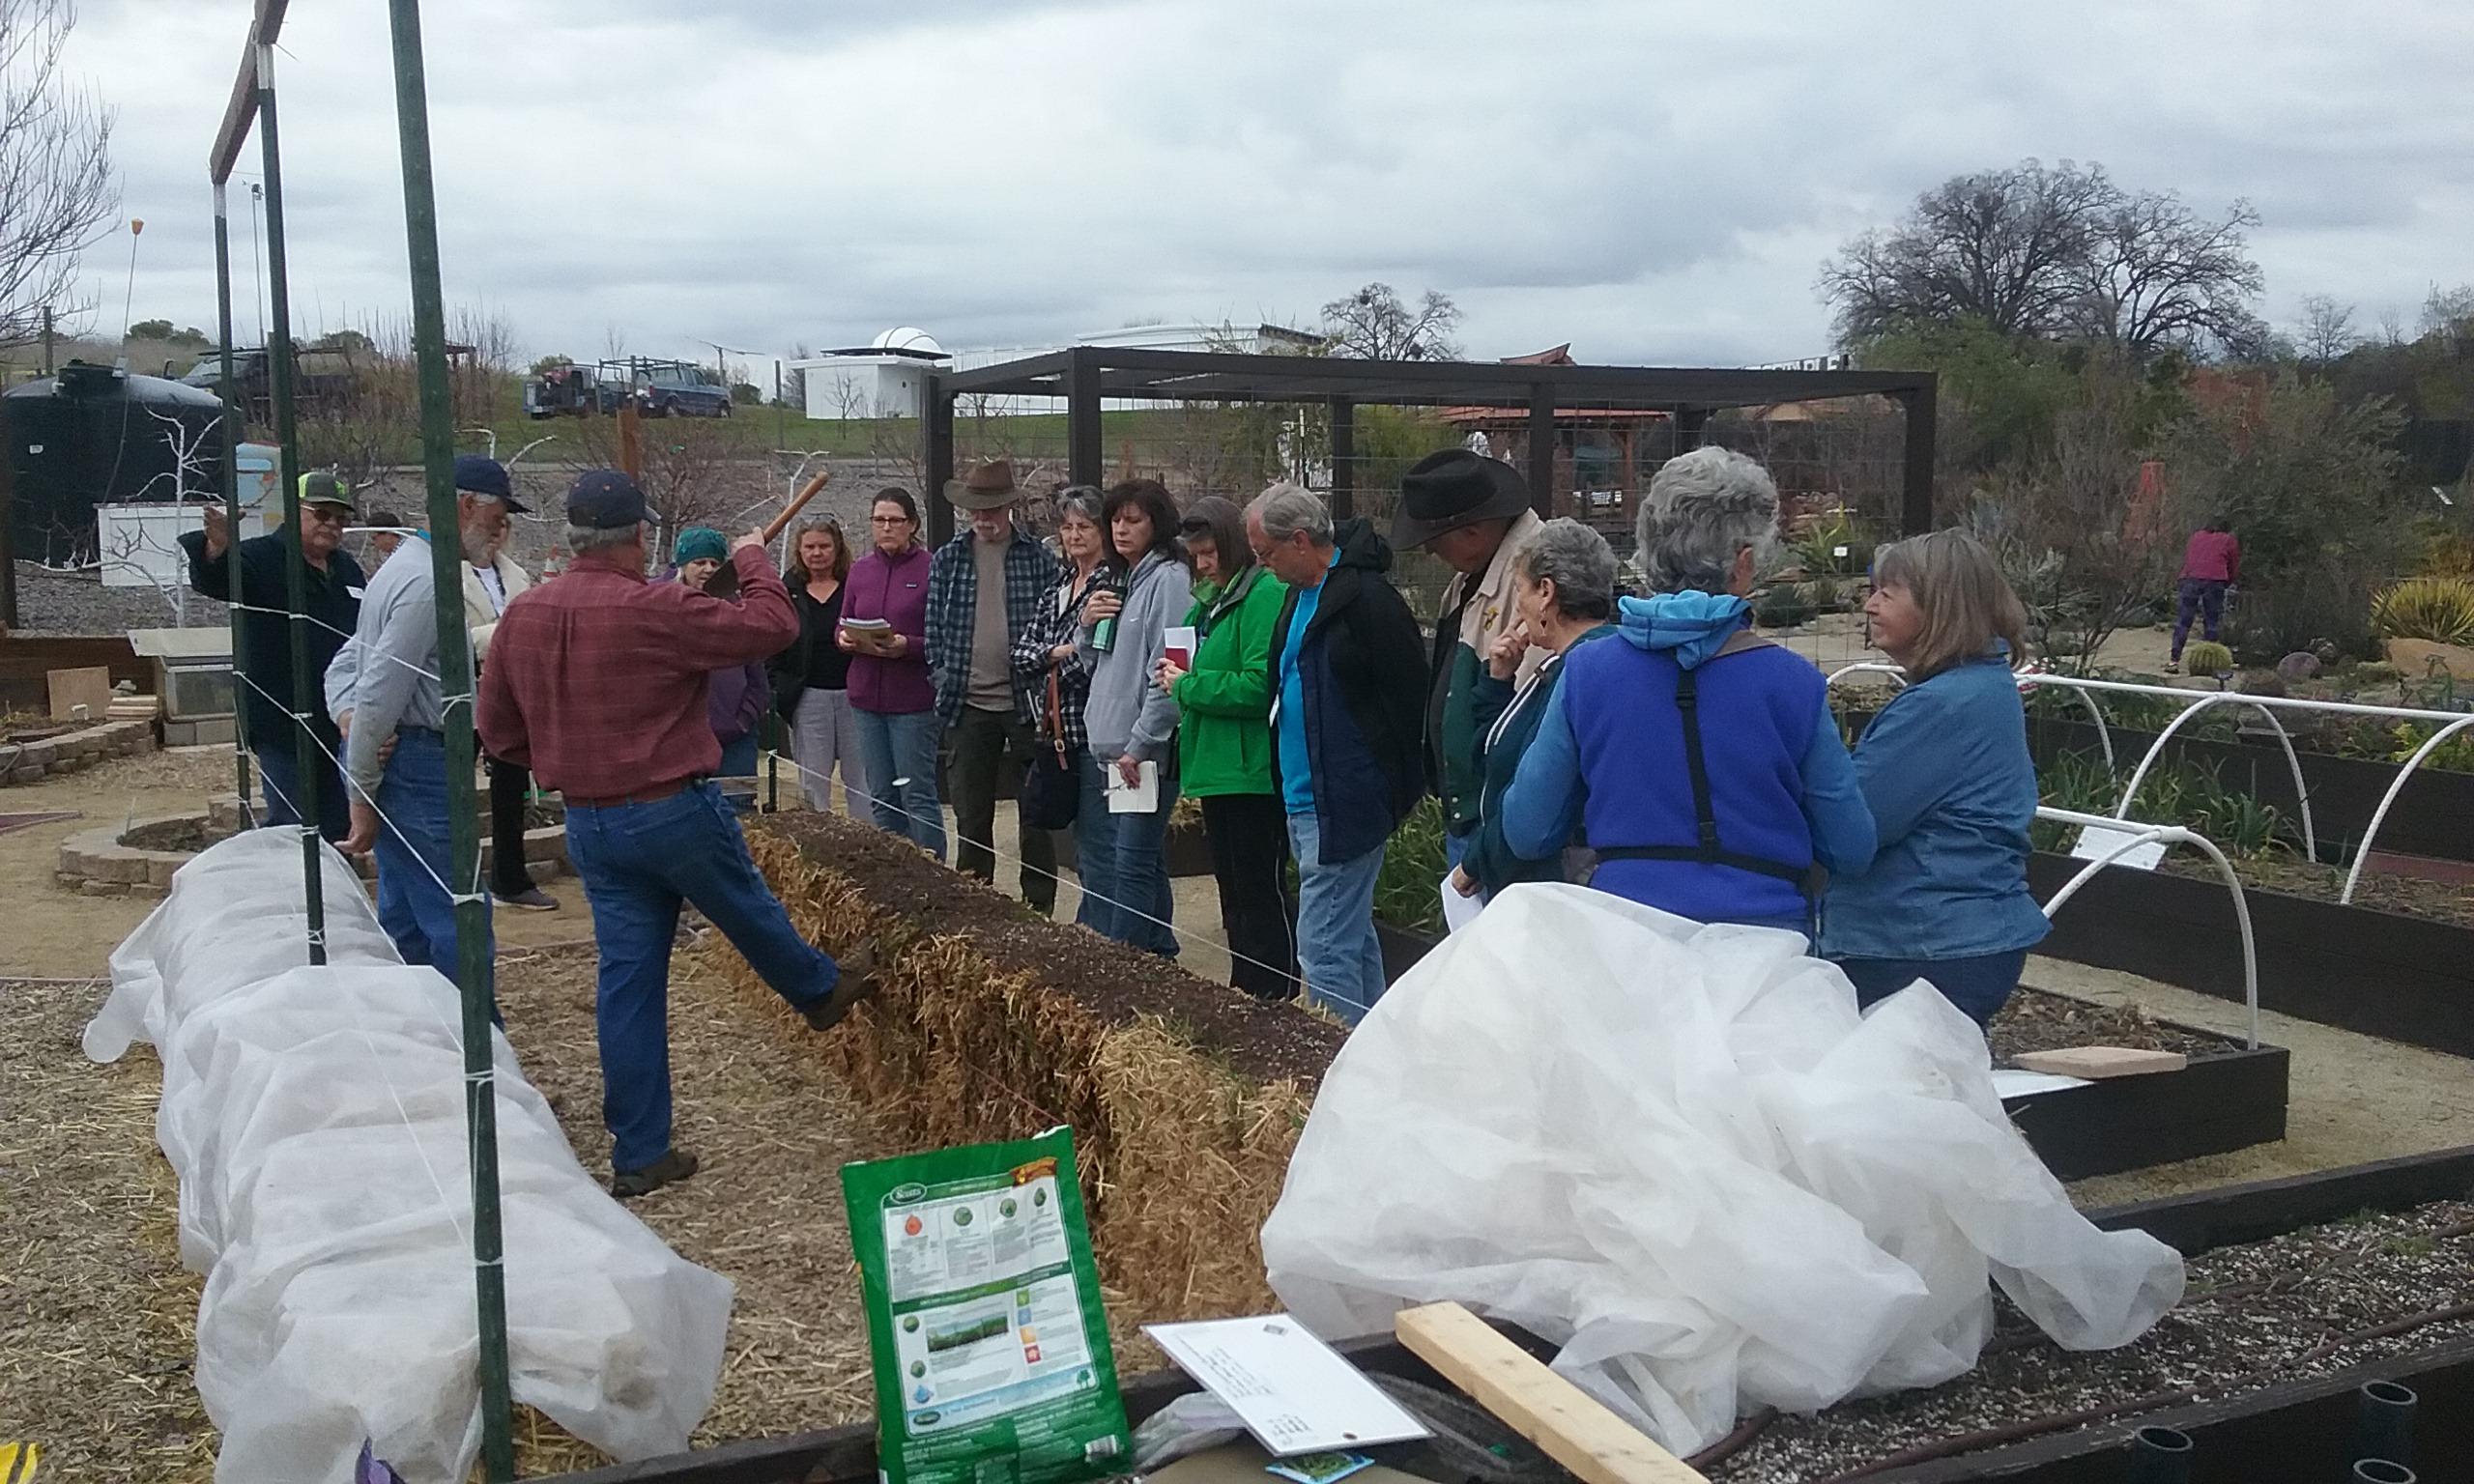 3-10-2018, 2nd Public class 'Straw Bale Gardening - Part 2' - planting